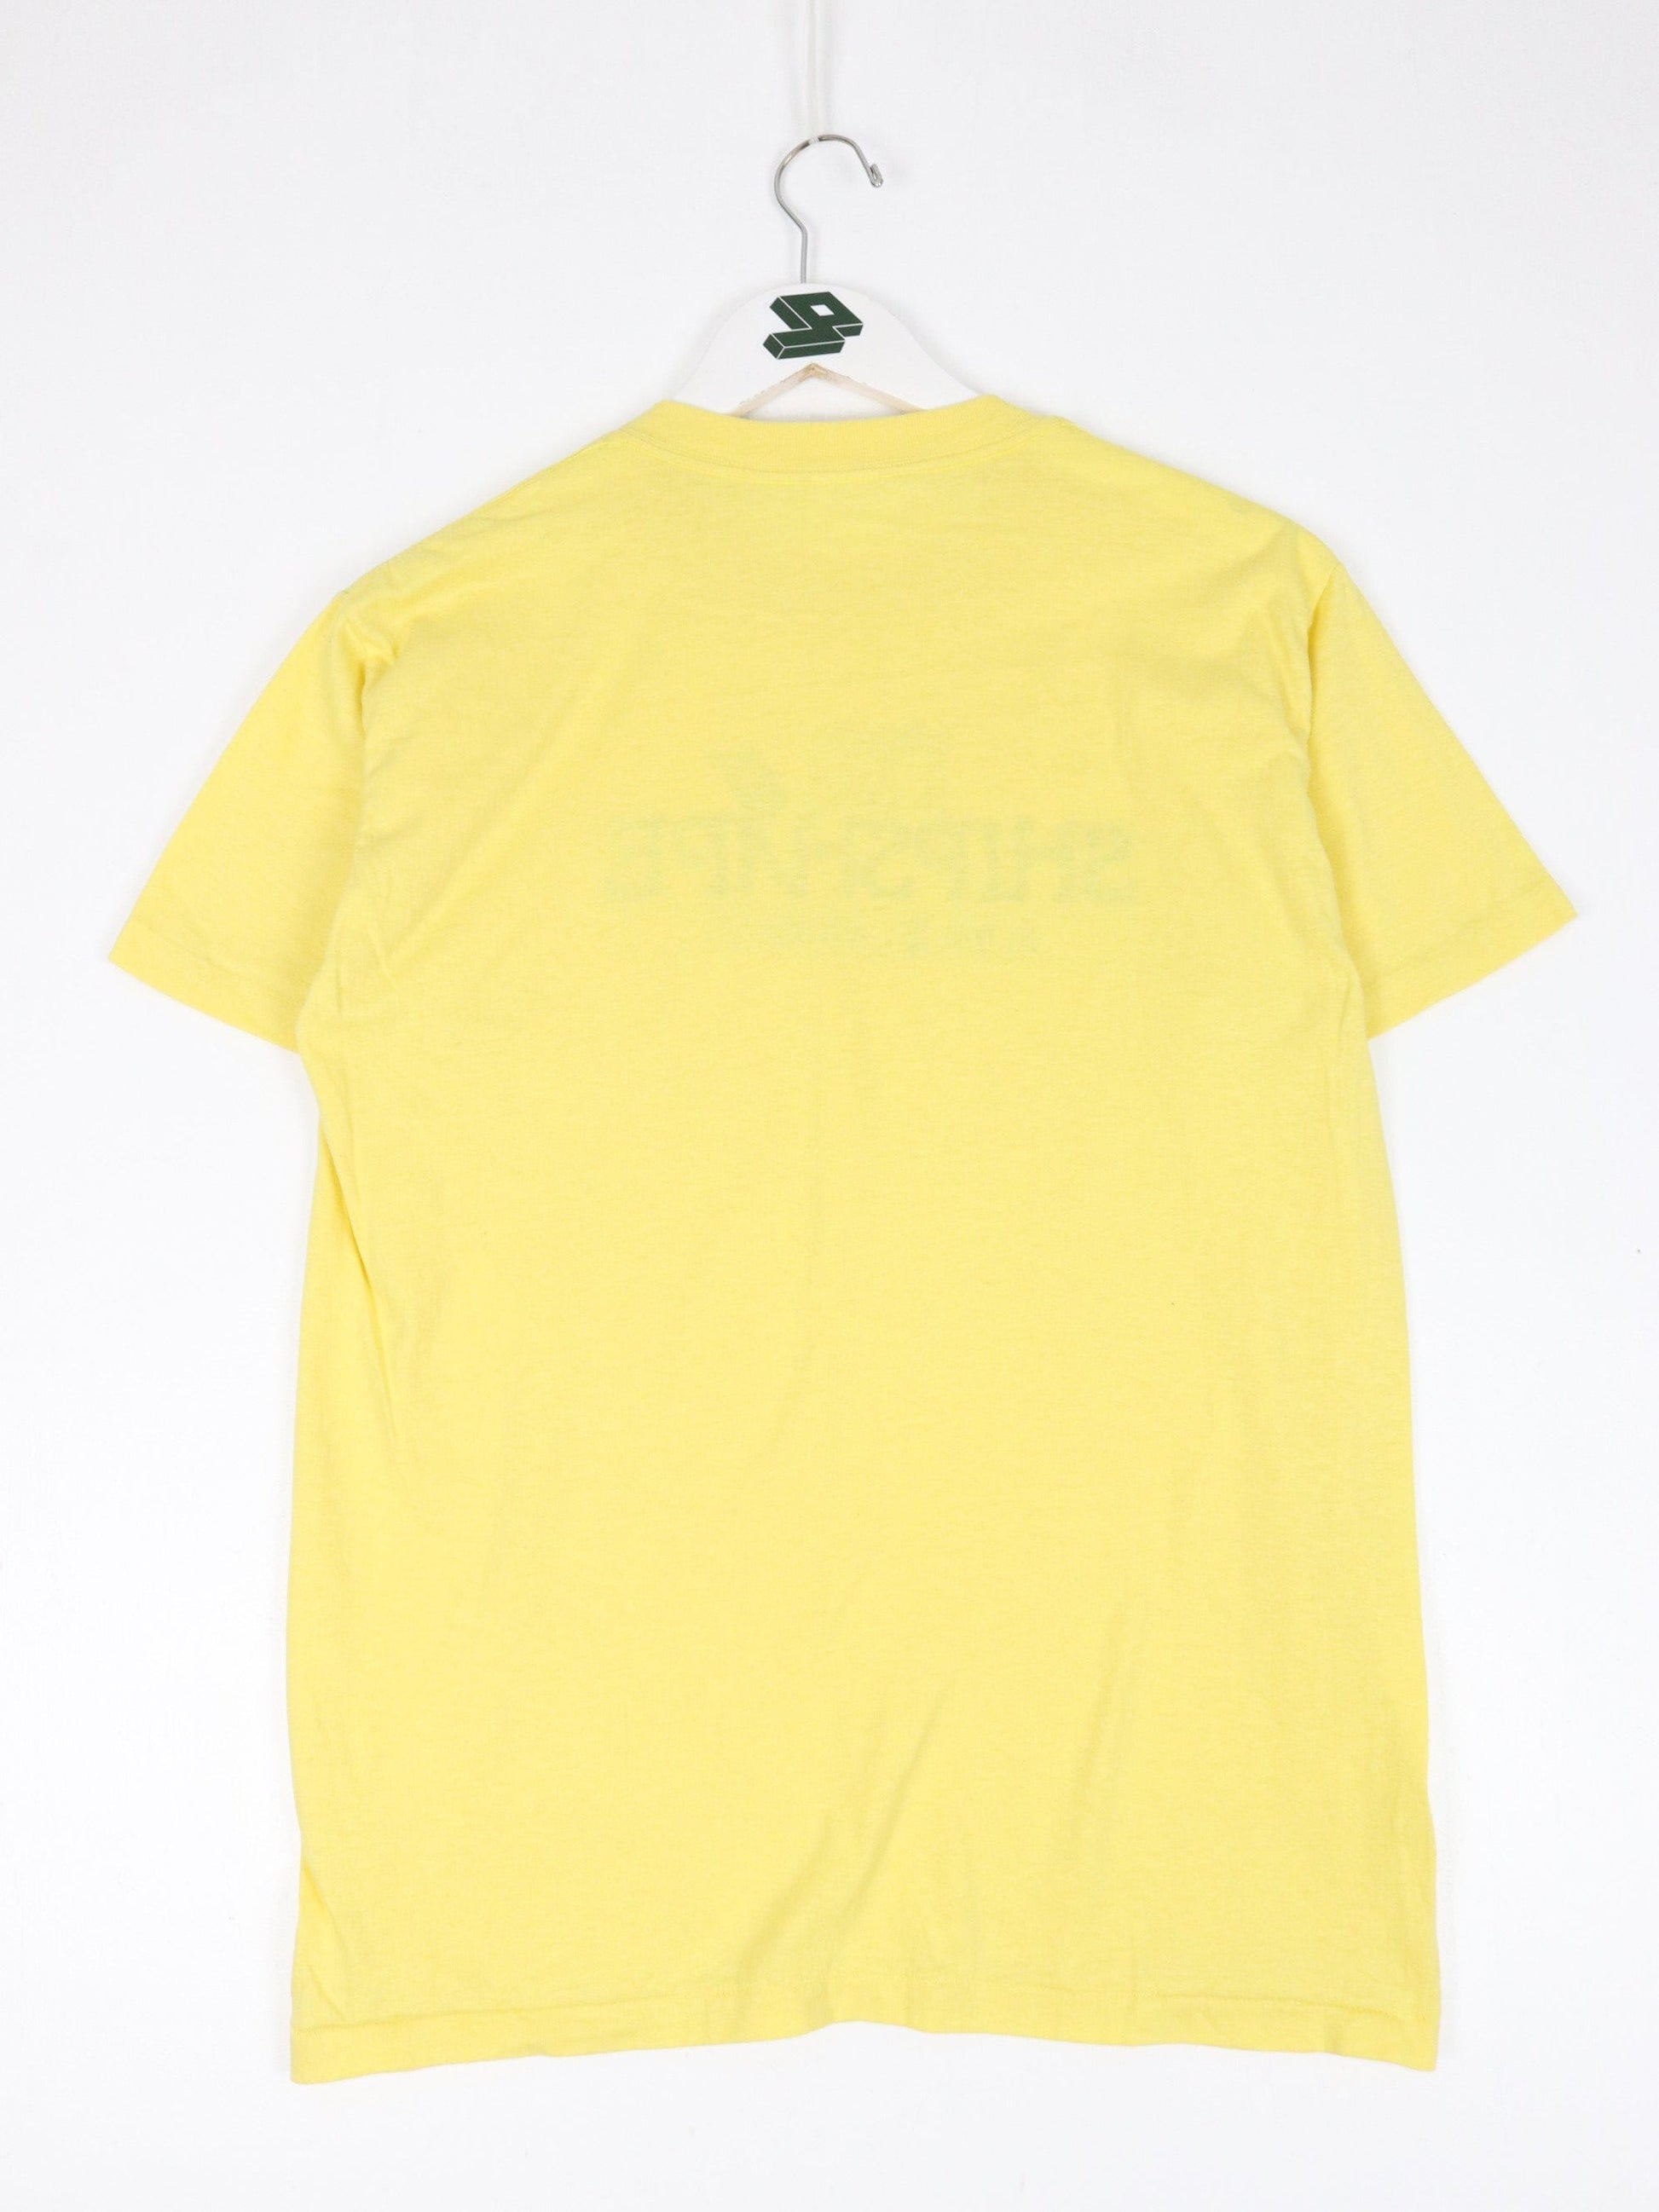 Other T-Shirts & Tank Tops Vintage Royal Caribbean T Shirt Mens Small Yellow 80s Cruise